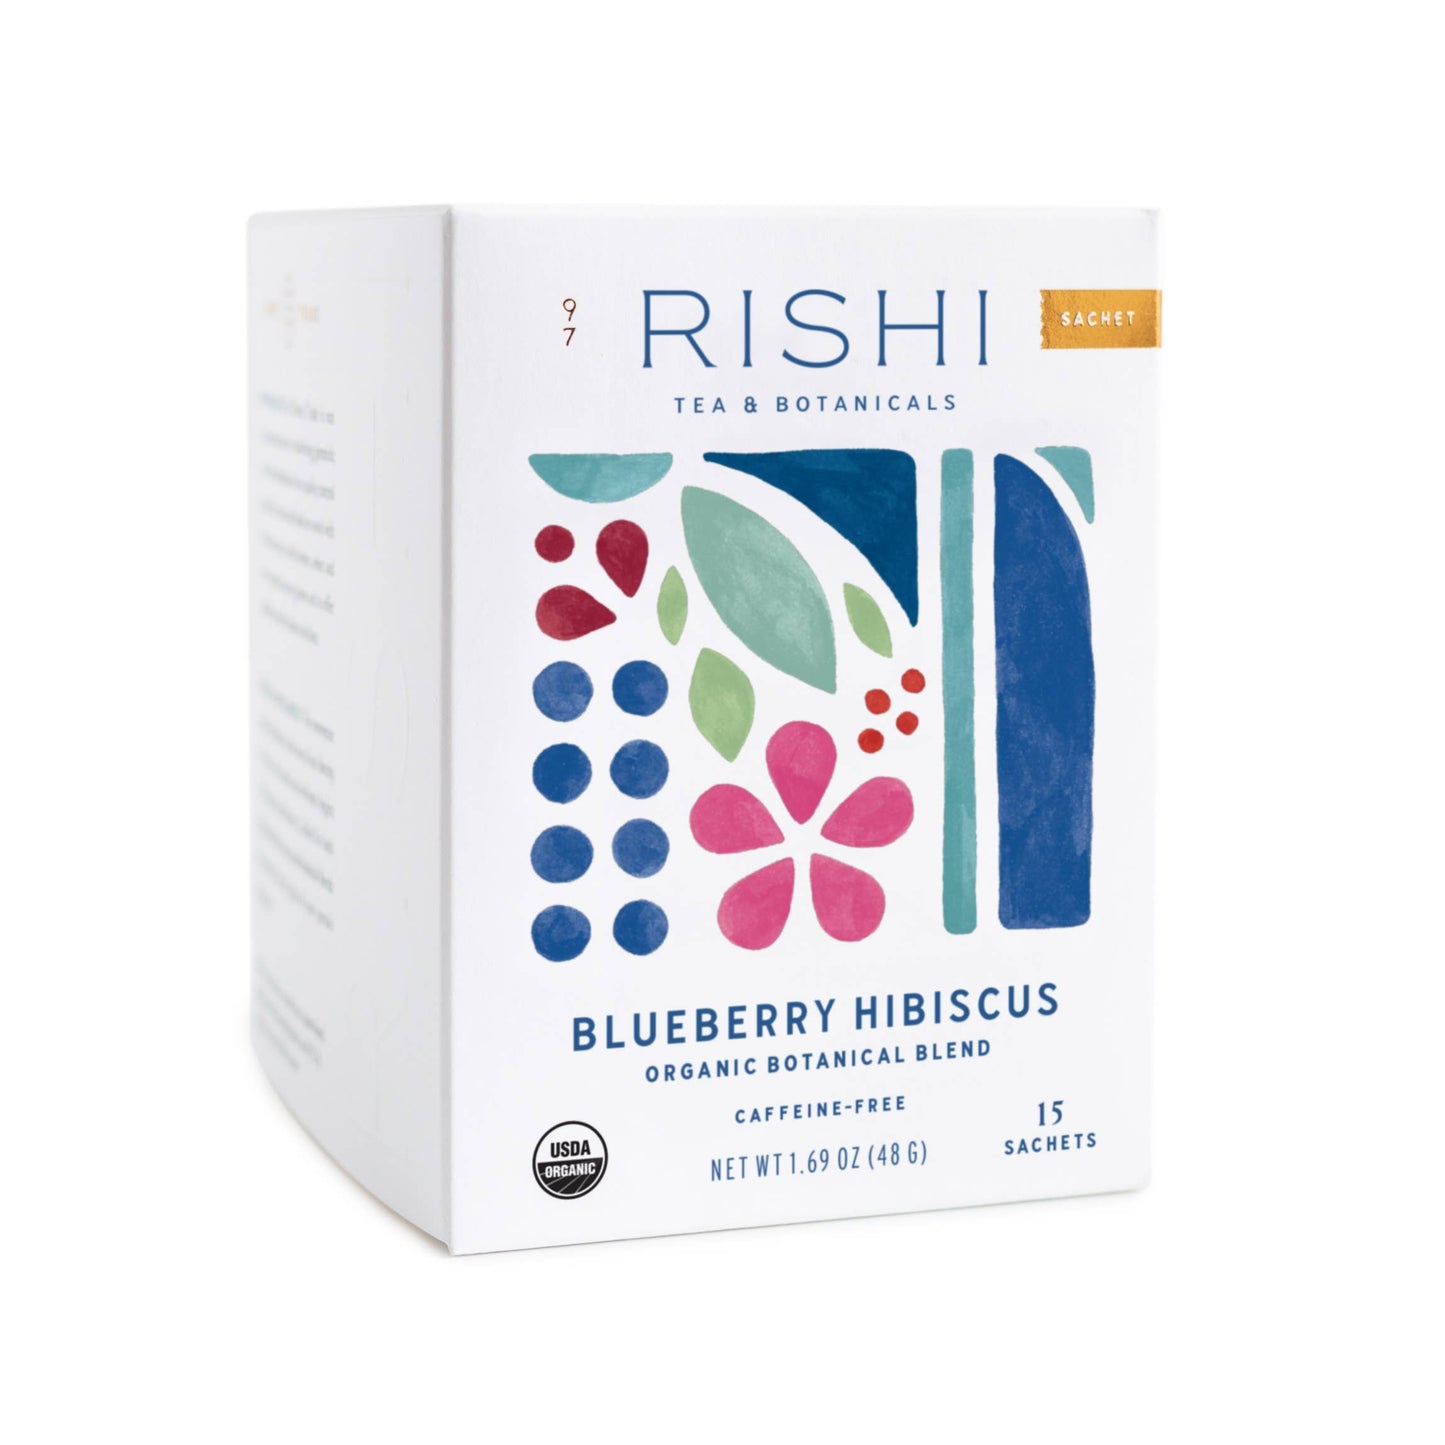 Rishi Tea & Botanicals - Blueberry Hibiscus Organic Herbal Tea Sachets